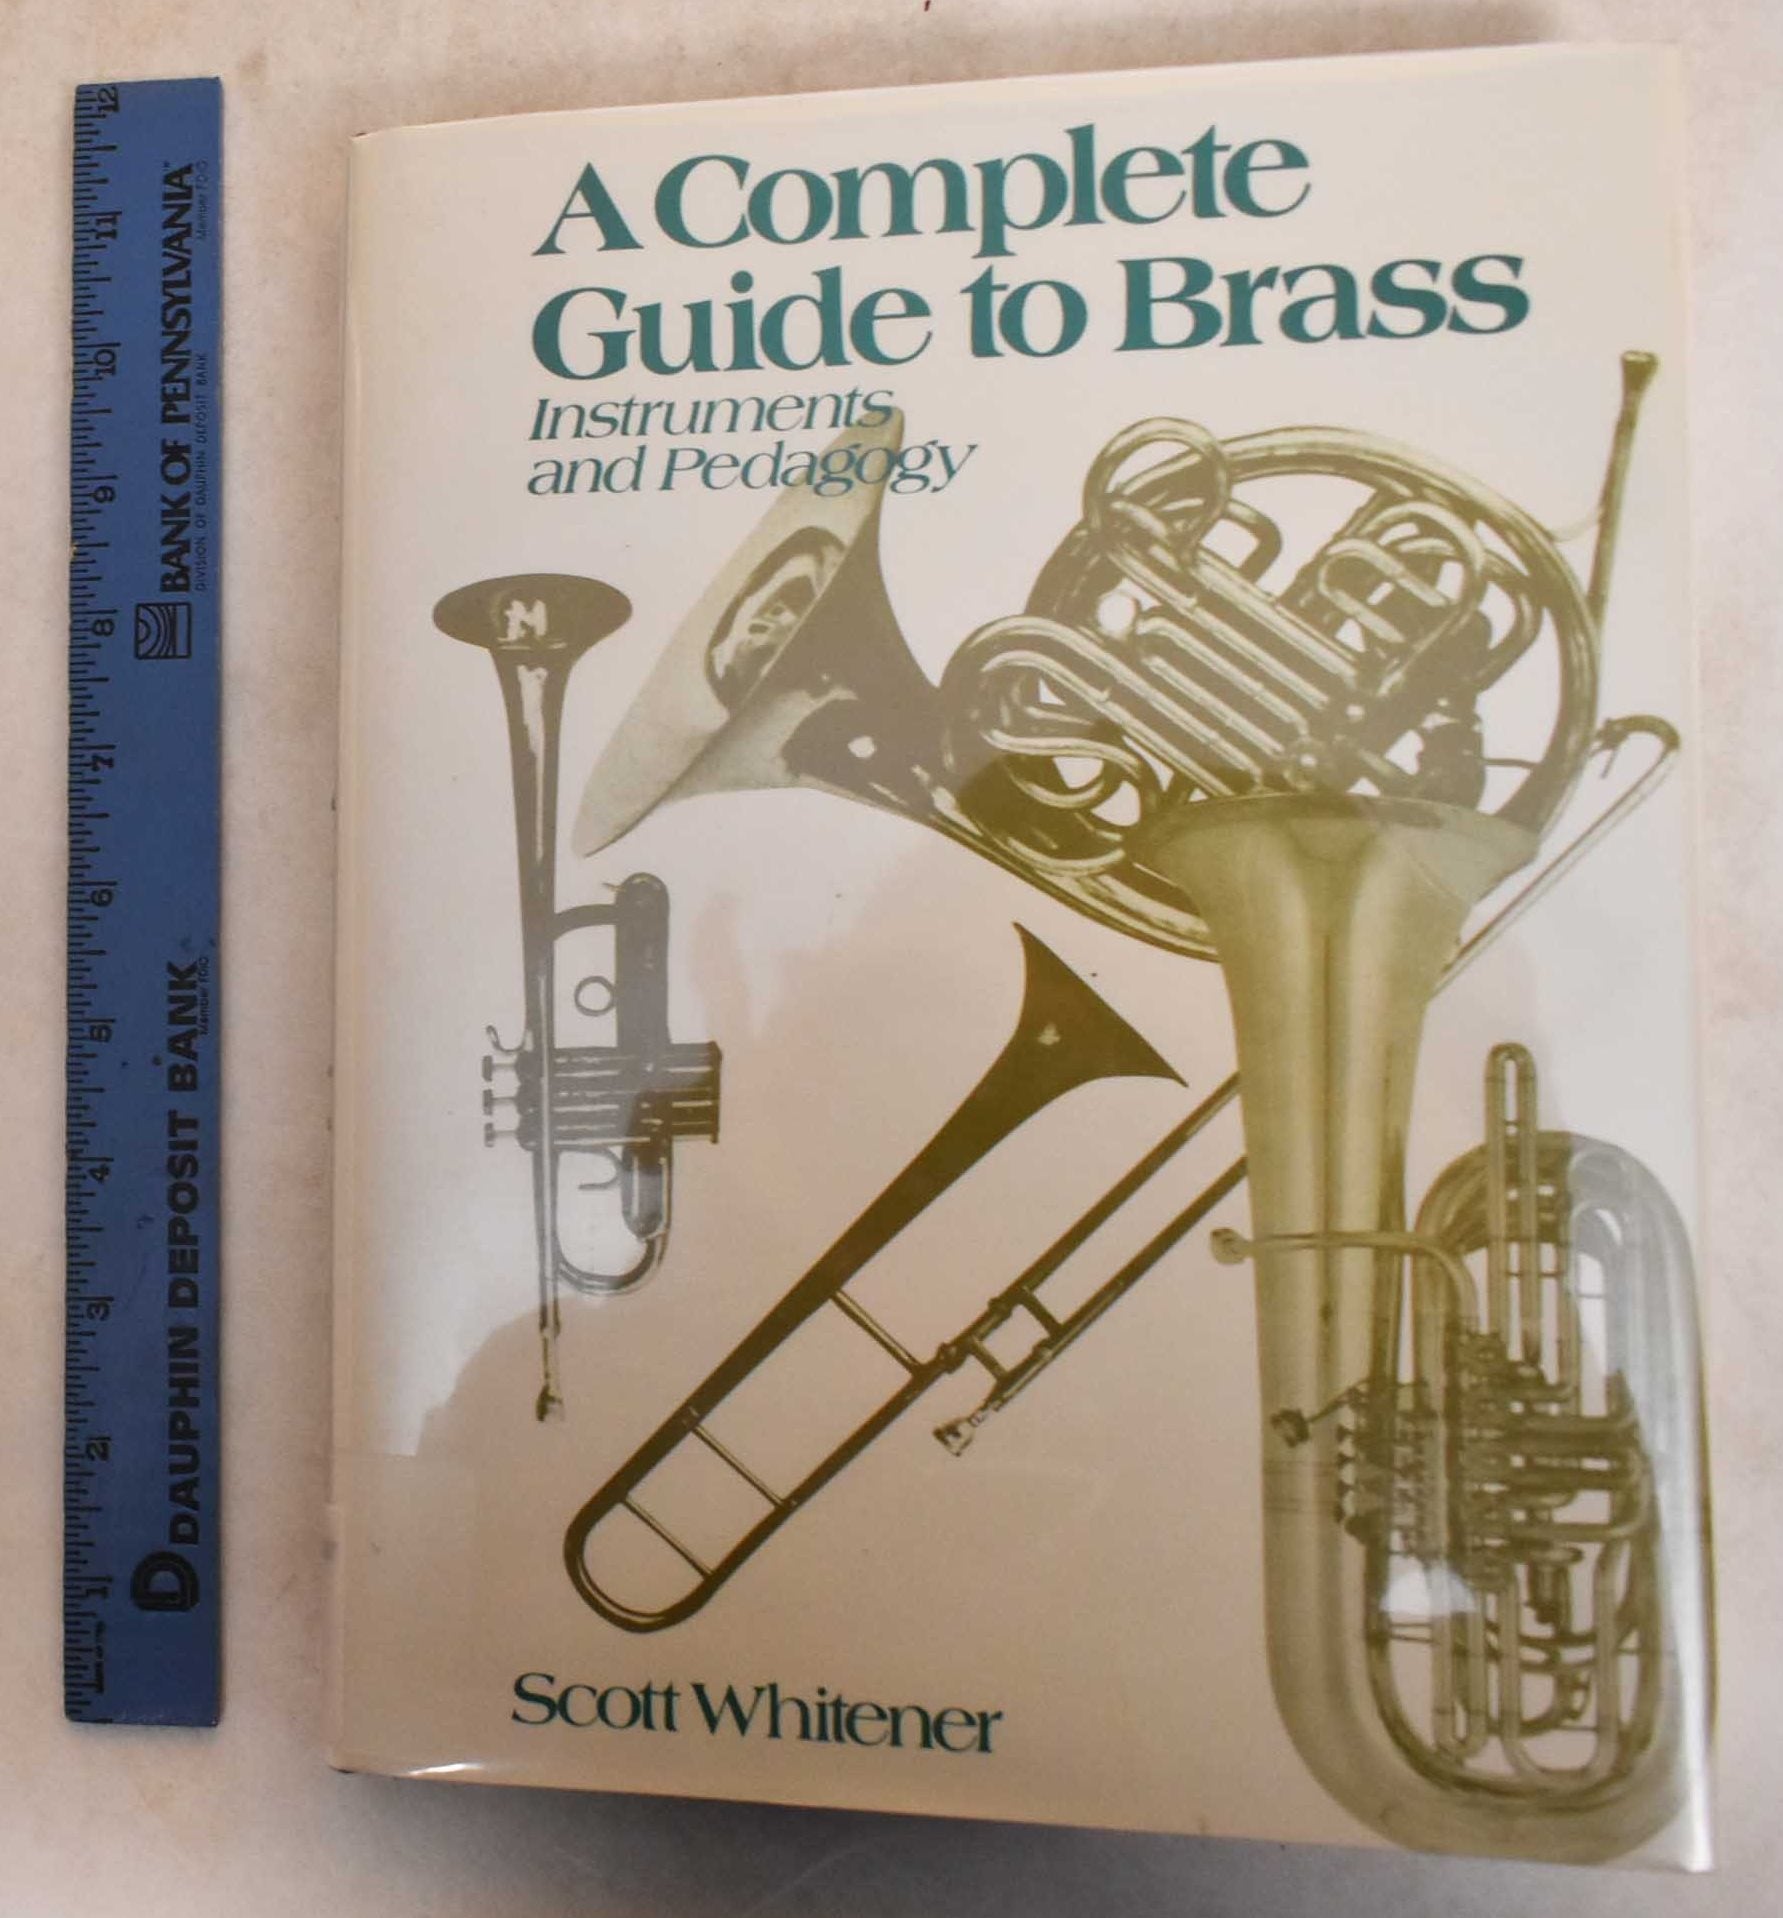 A Beginner's Guide To Brass